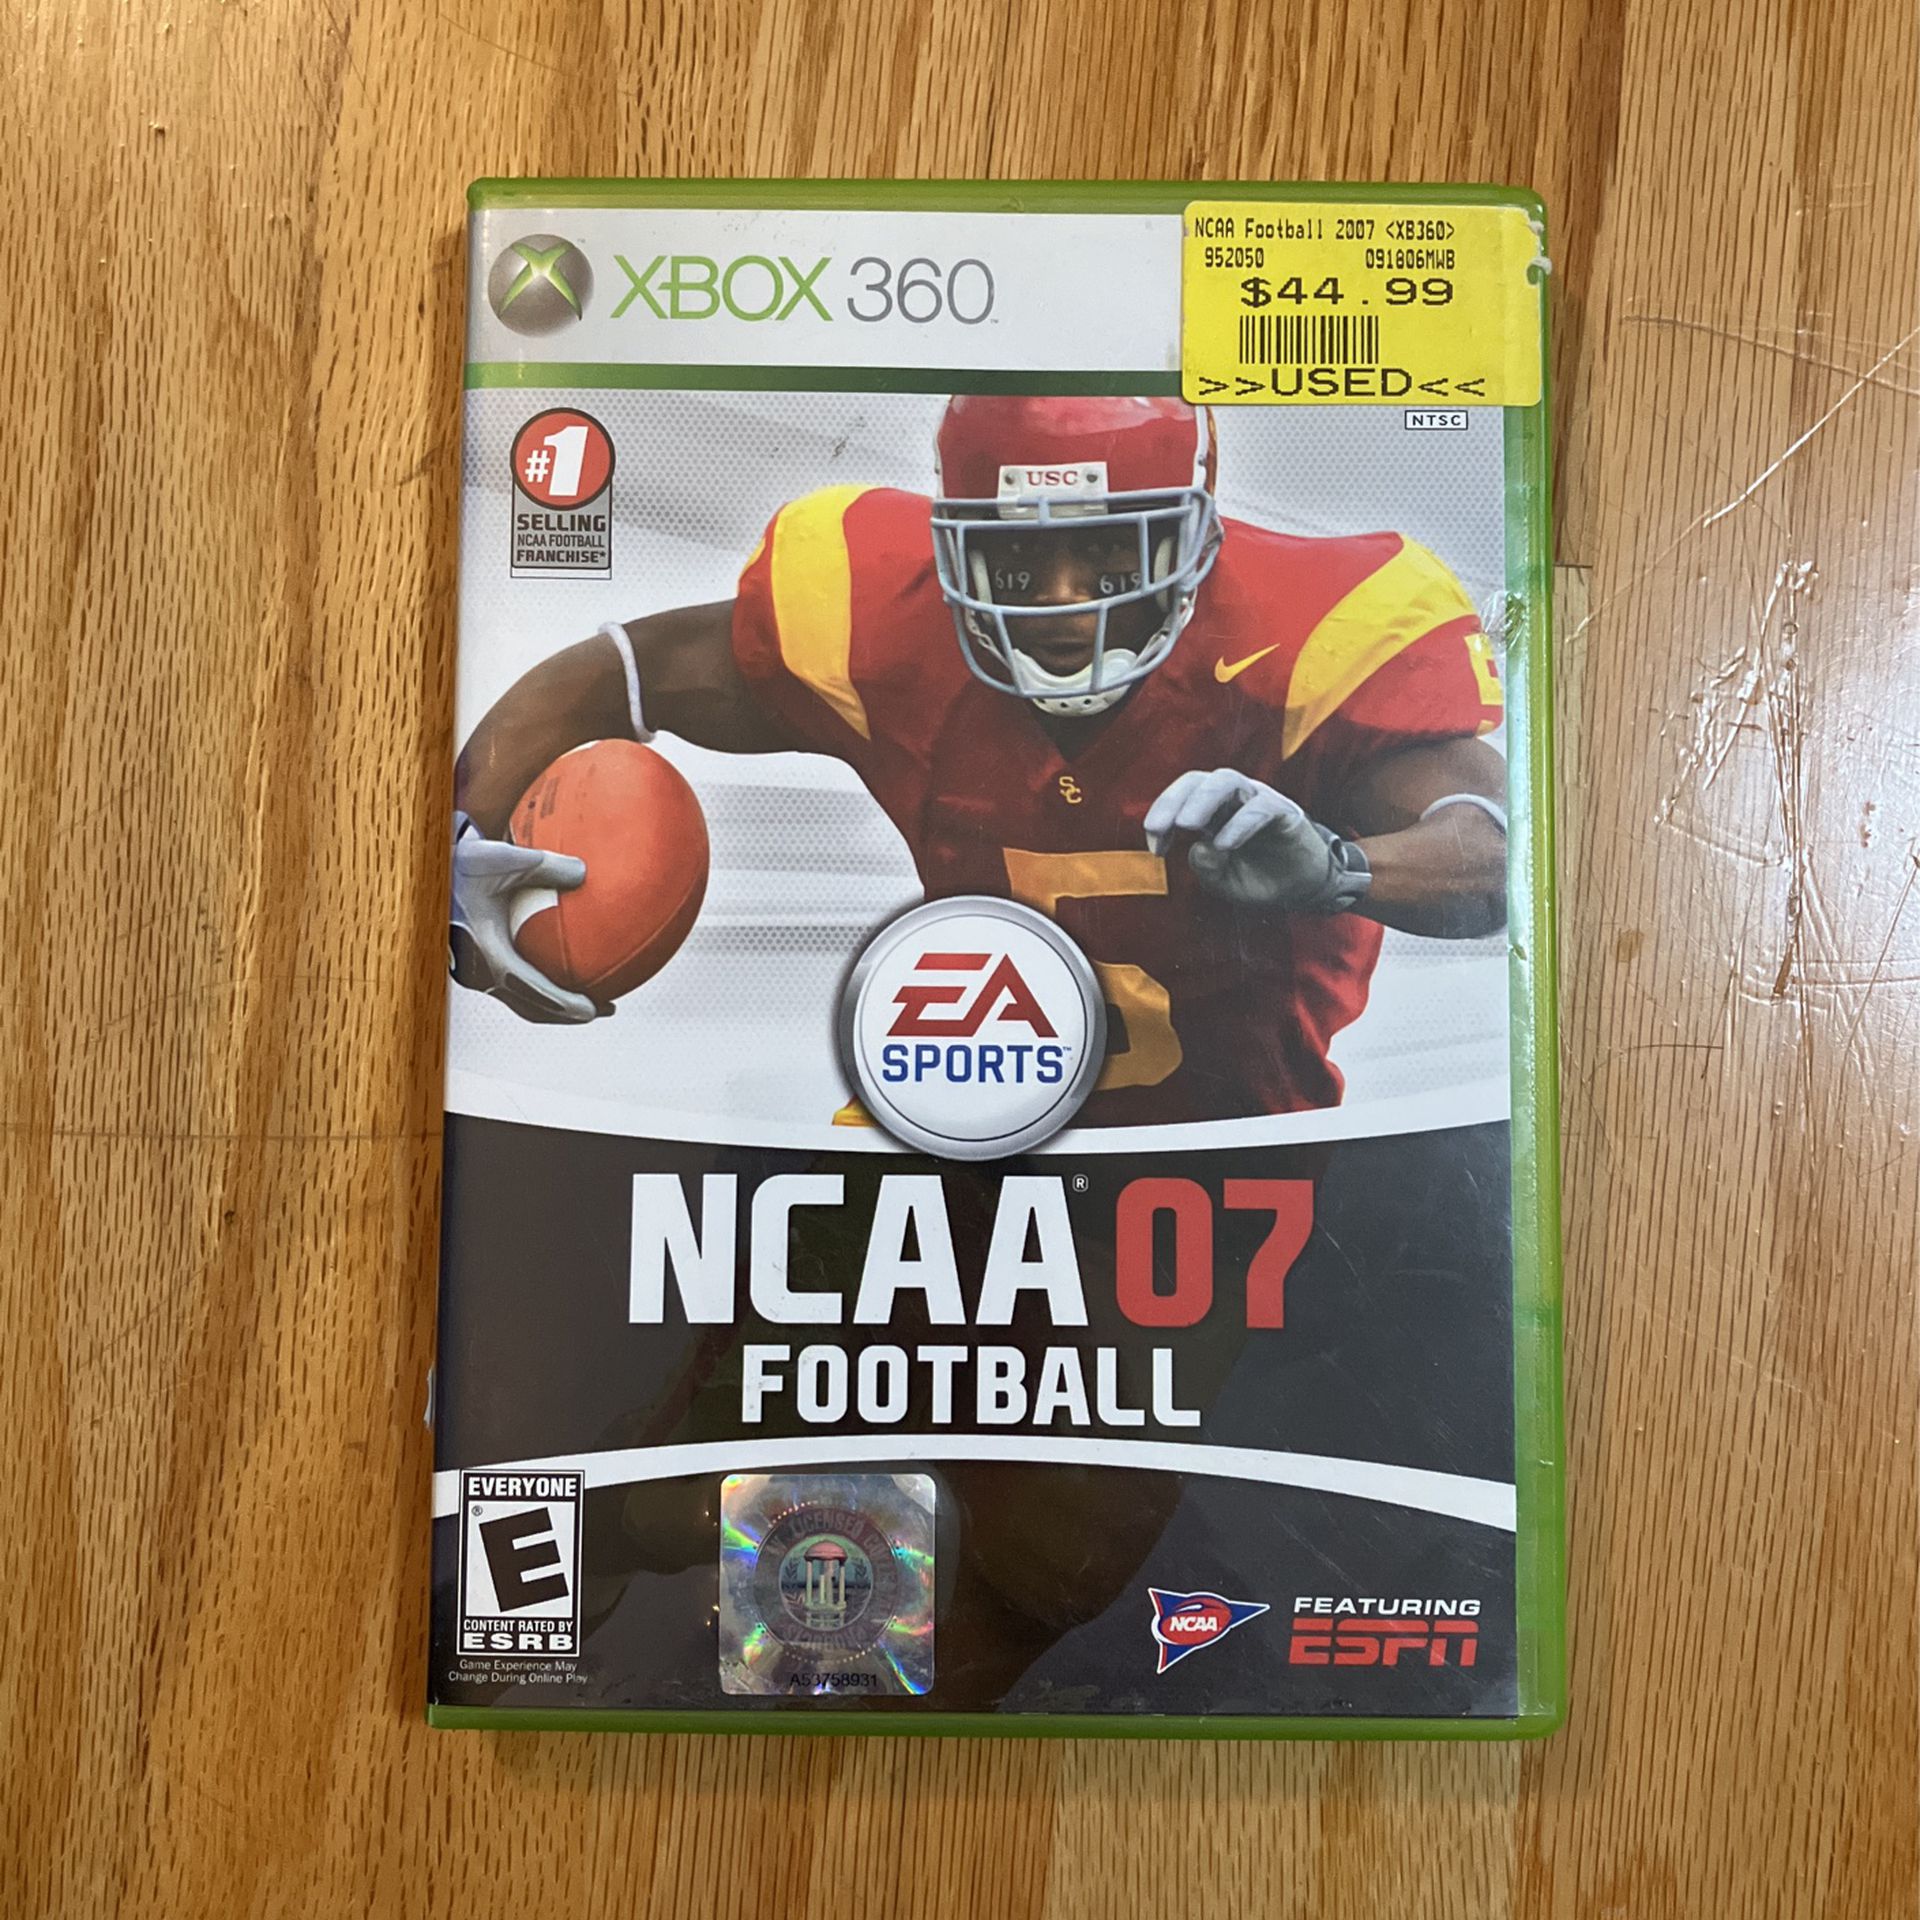 NCAA 07 Football Xbox 360 Game